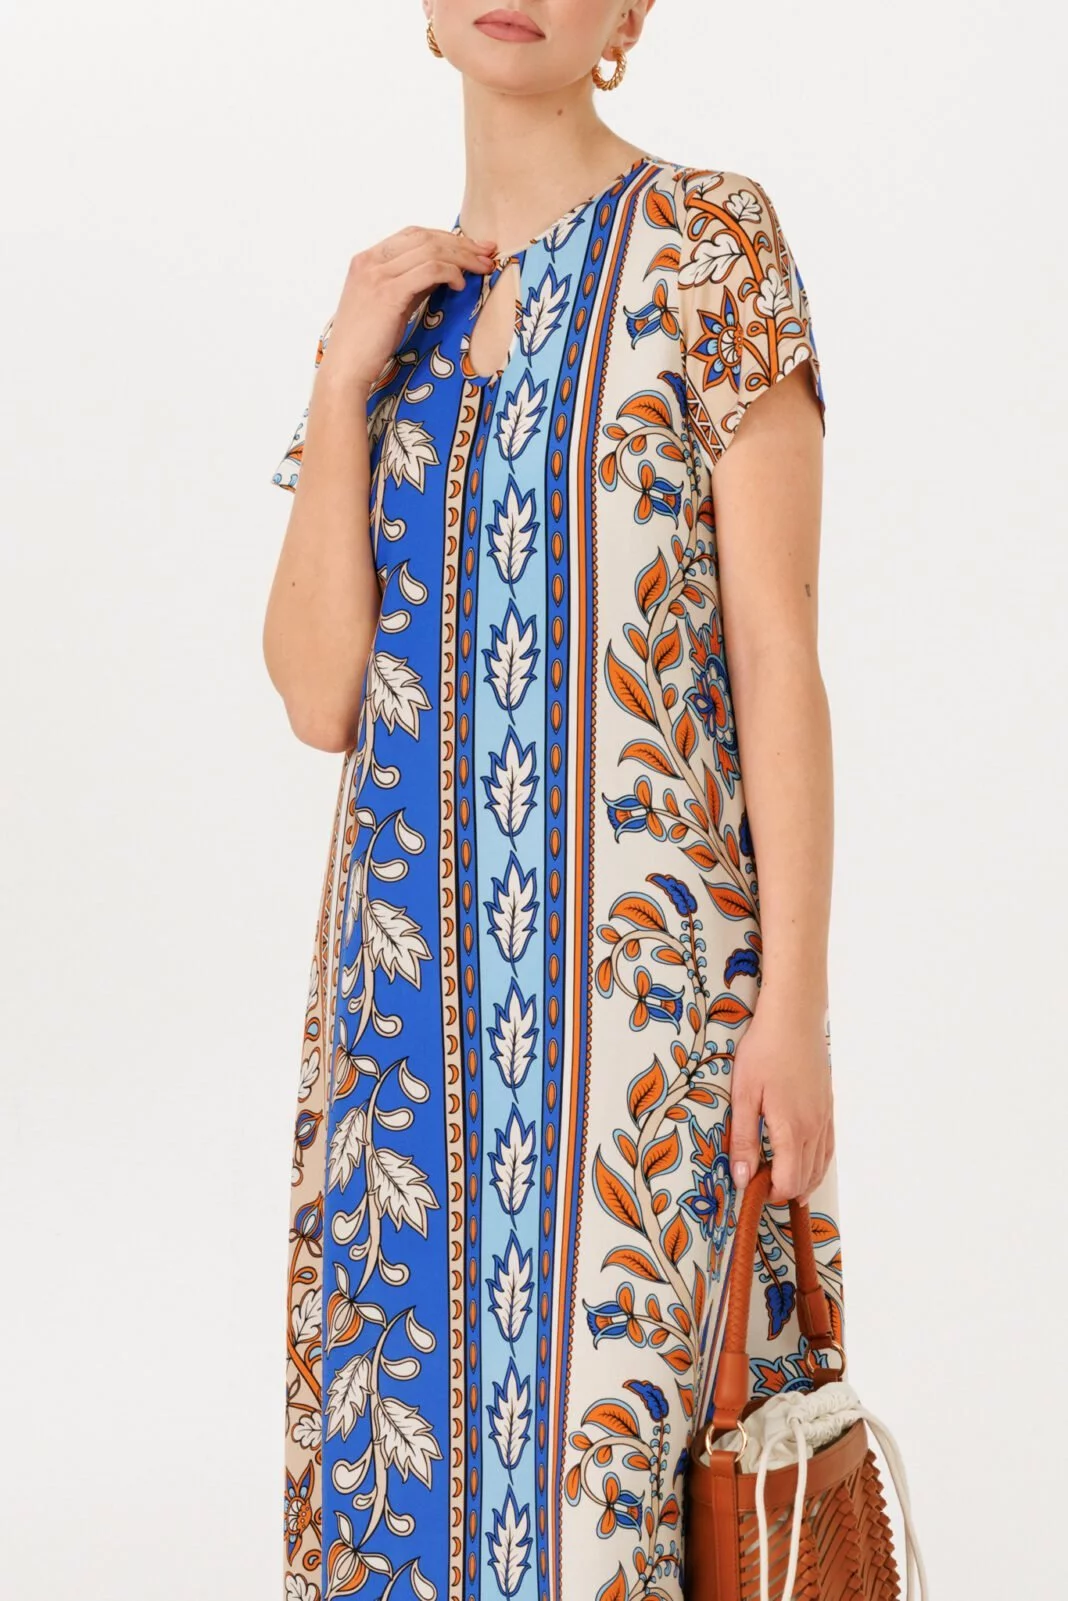 Mediterranean-Inspired Maxi Length Kaftan Dress - Beige and Blue Short Sleeve Elegance